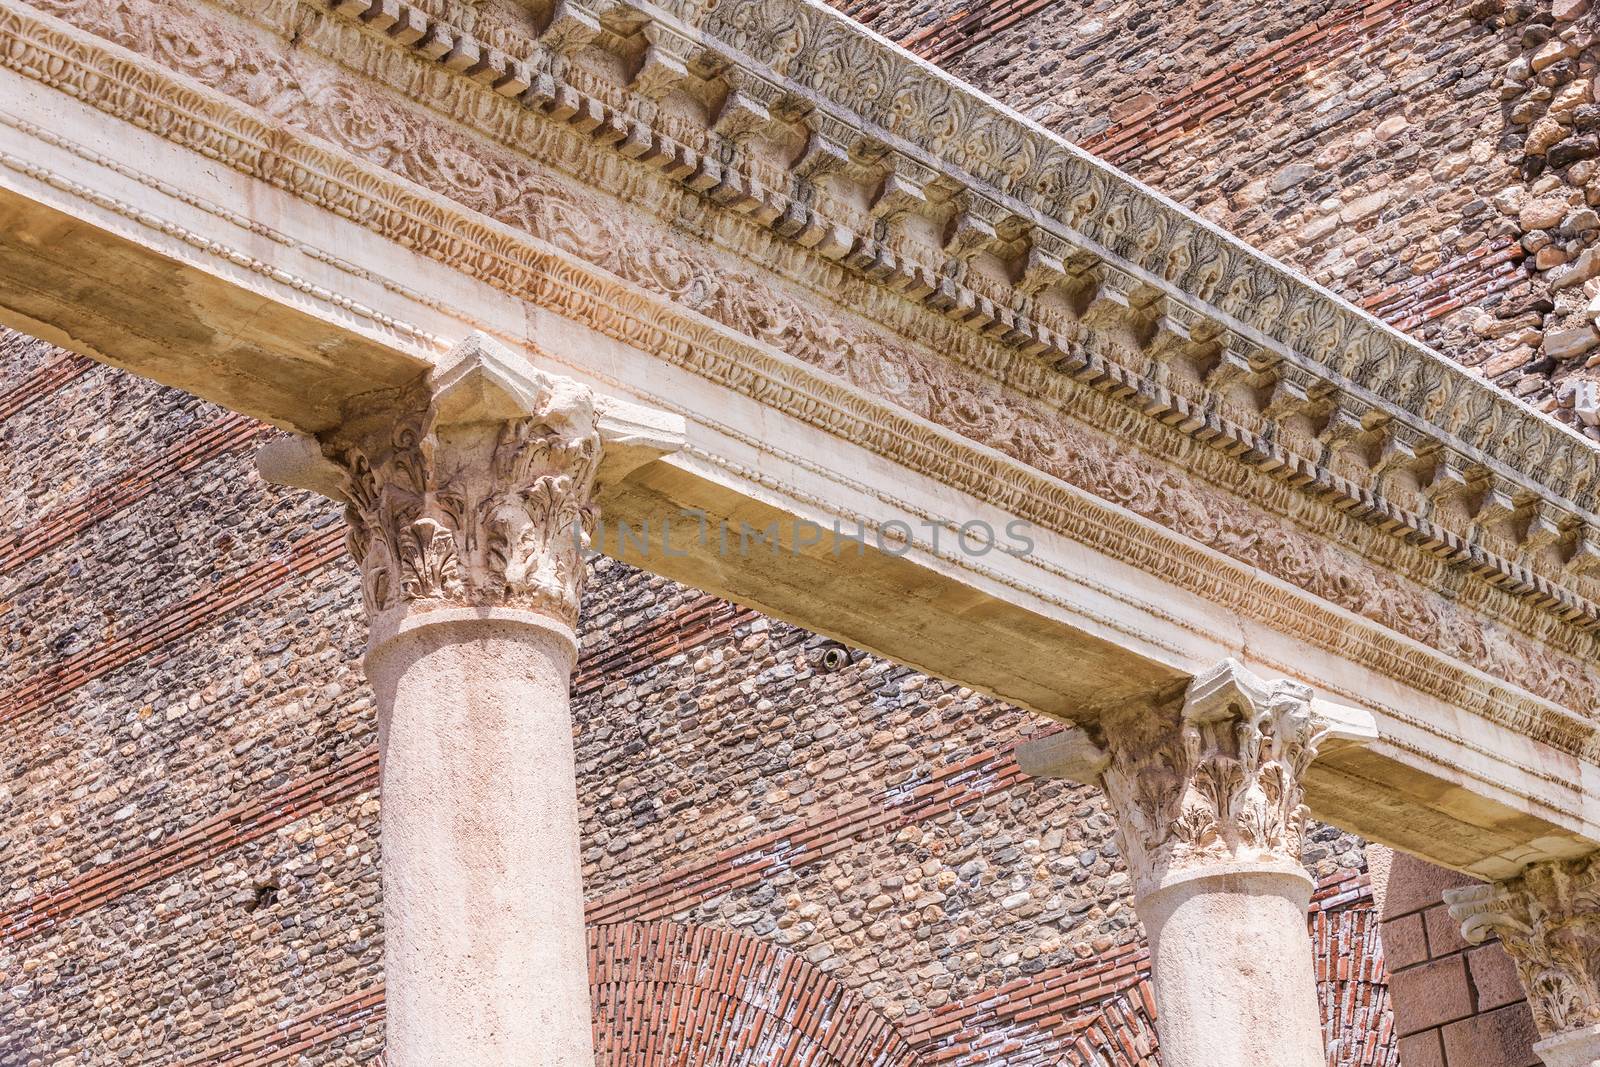 Two Corinthian columns and header at the gymnasium in Sardis Turkey